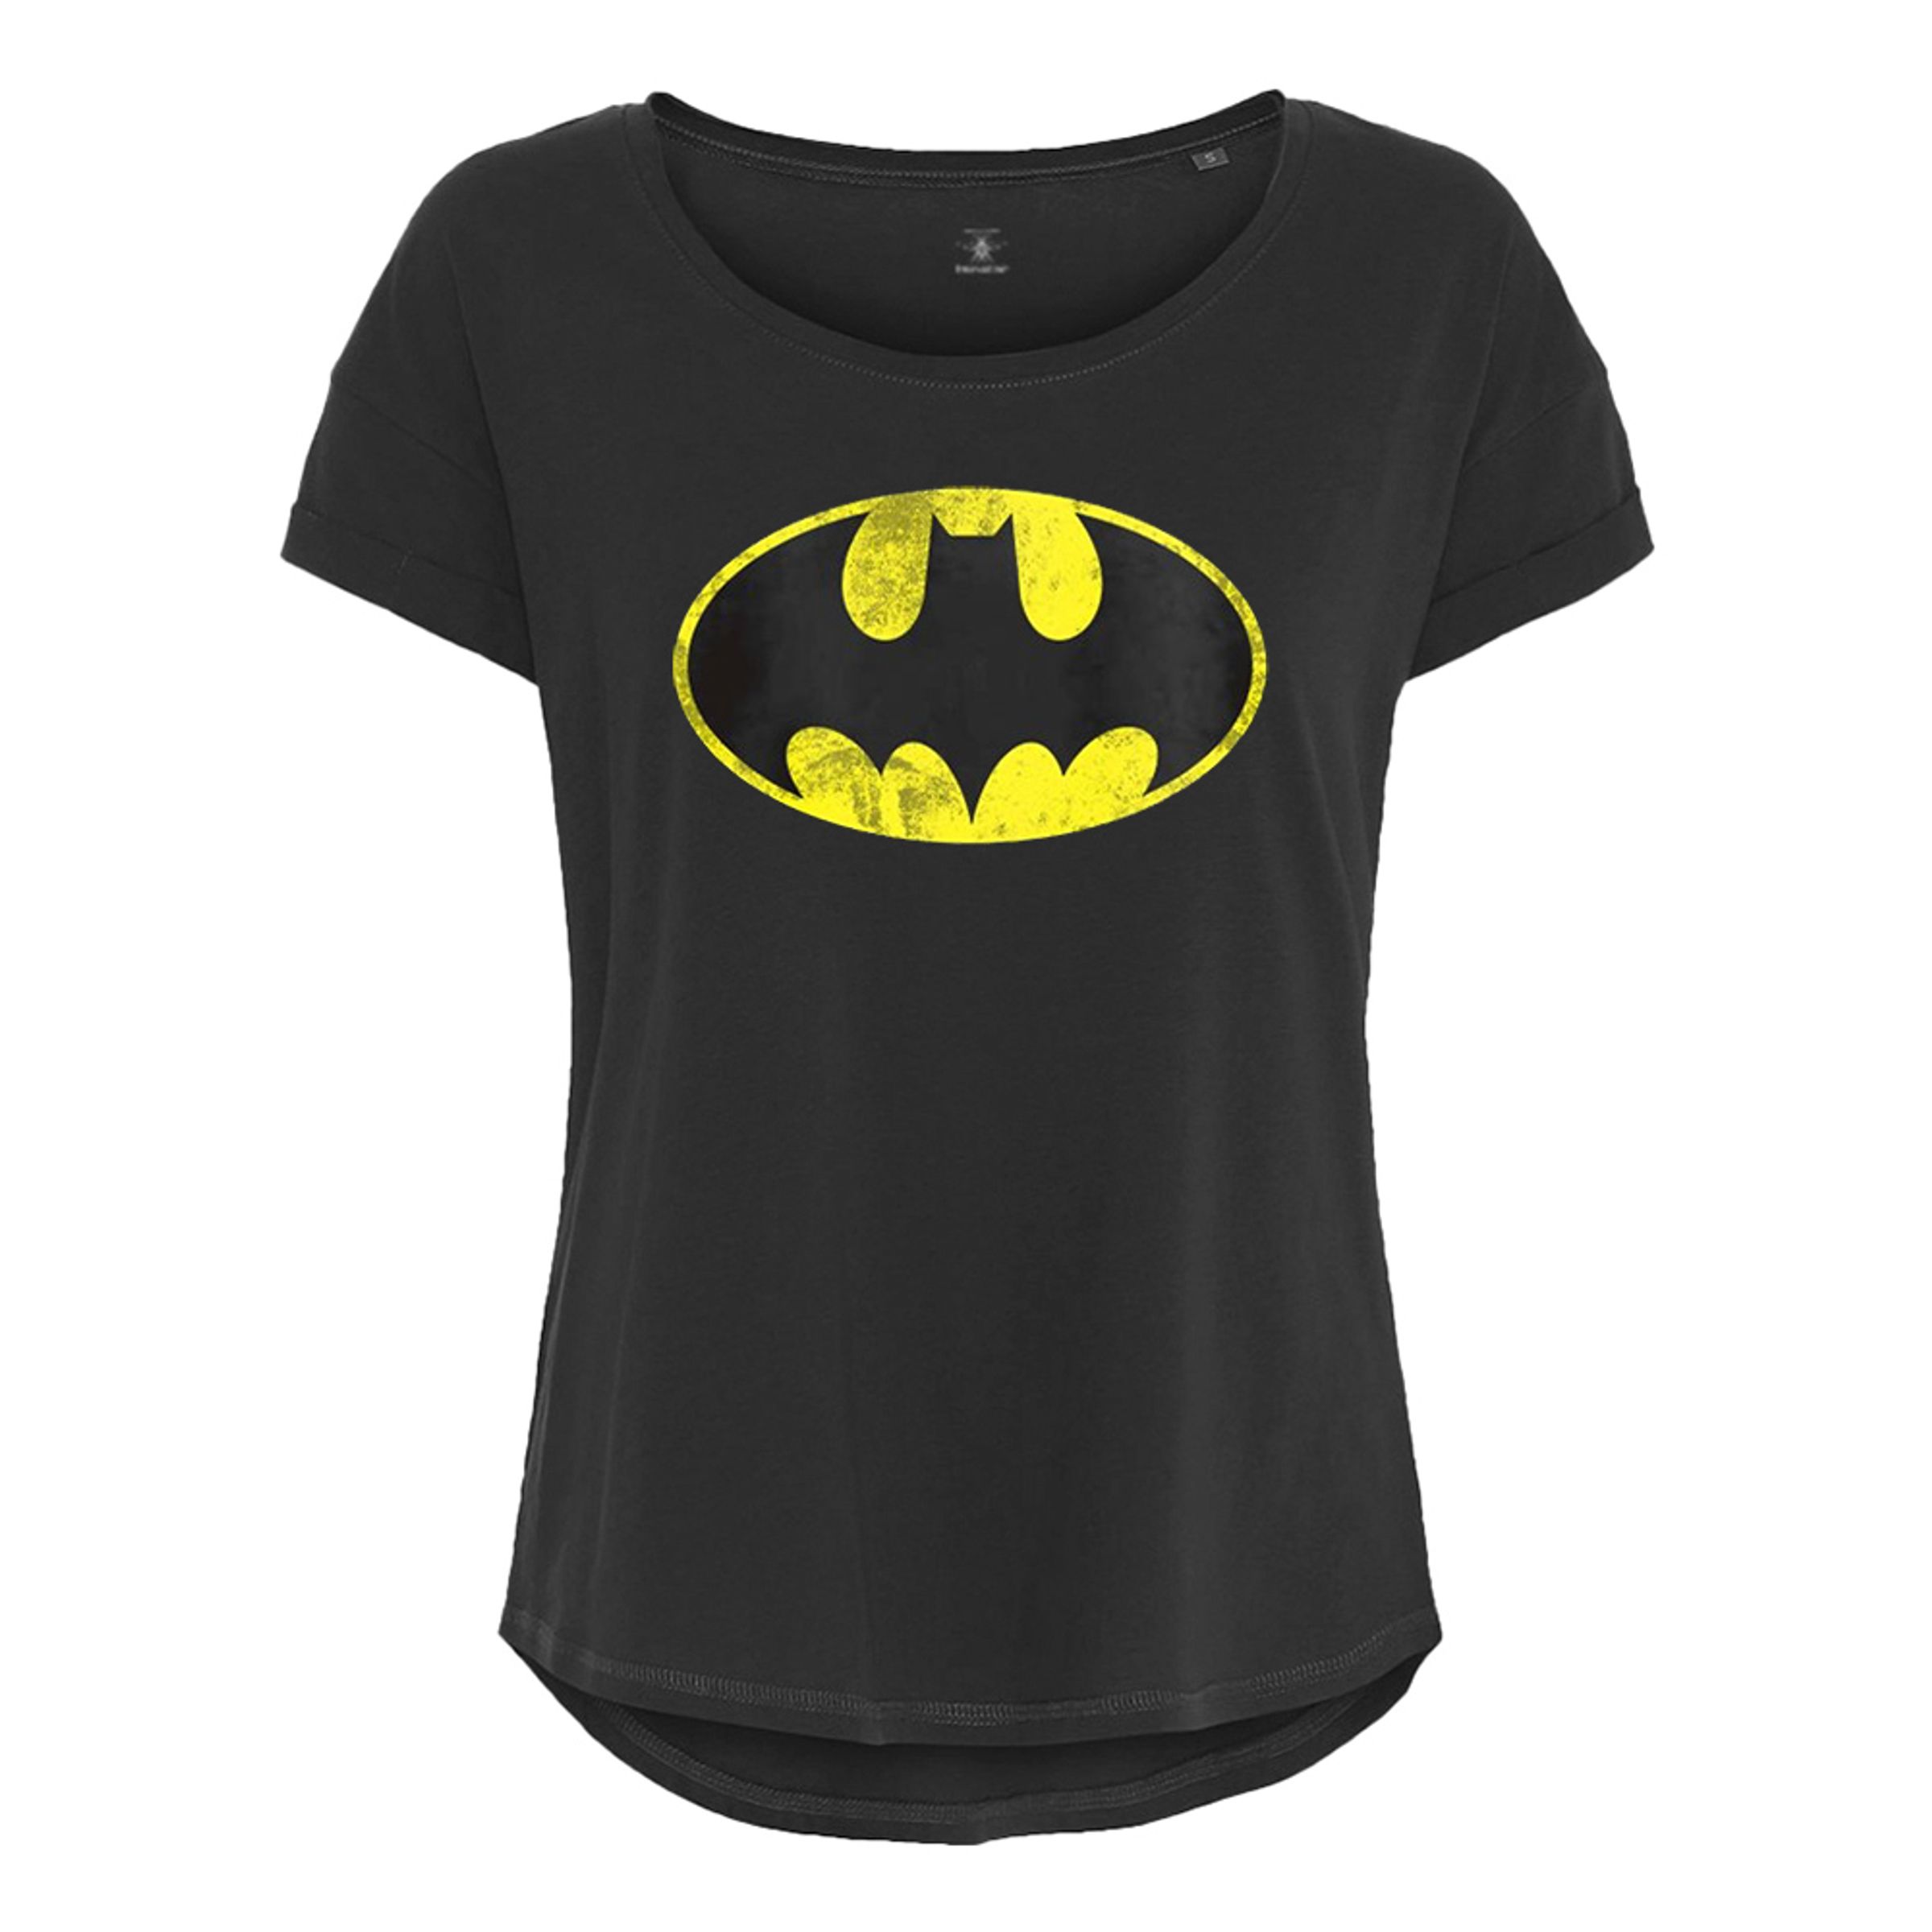 Batman Dam T-shirt - Medium